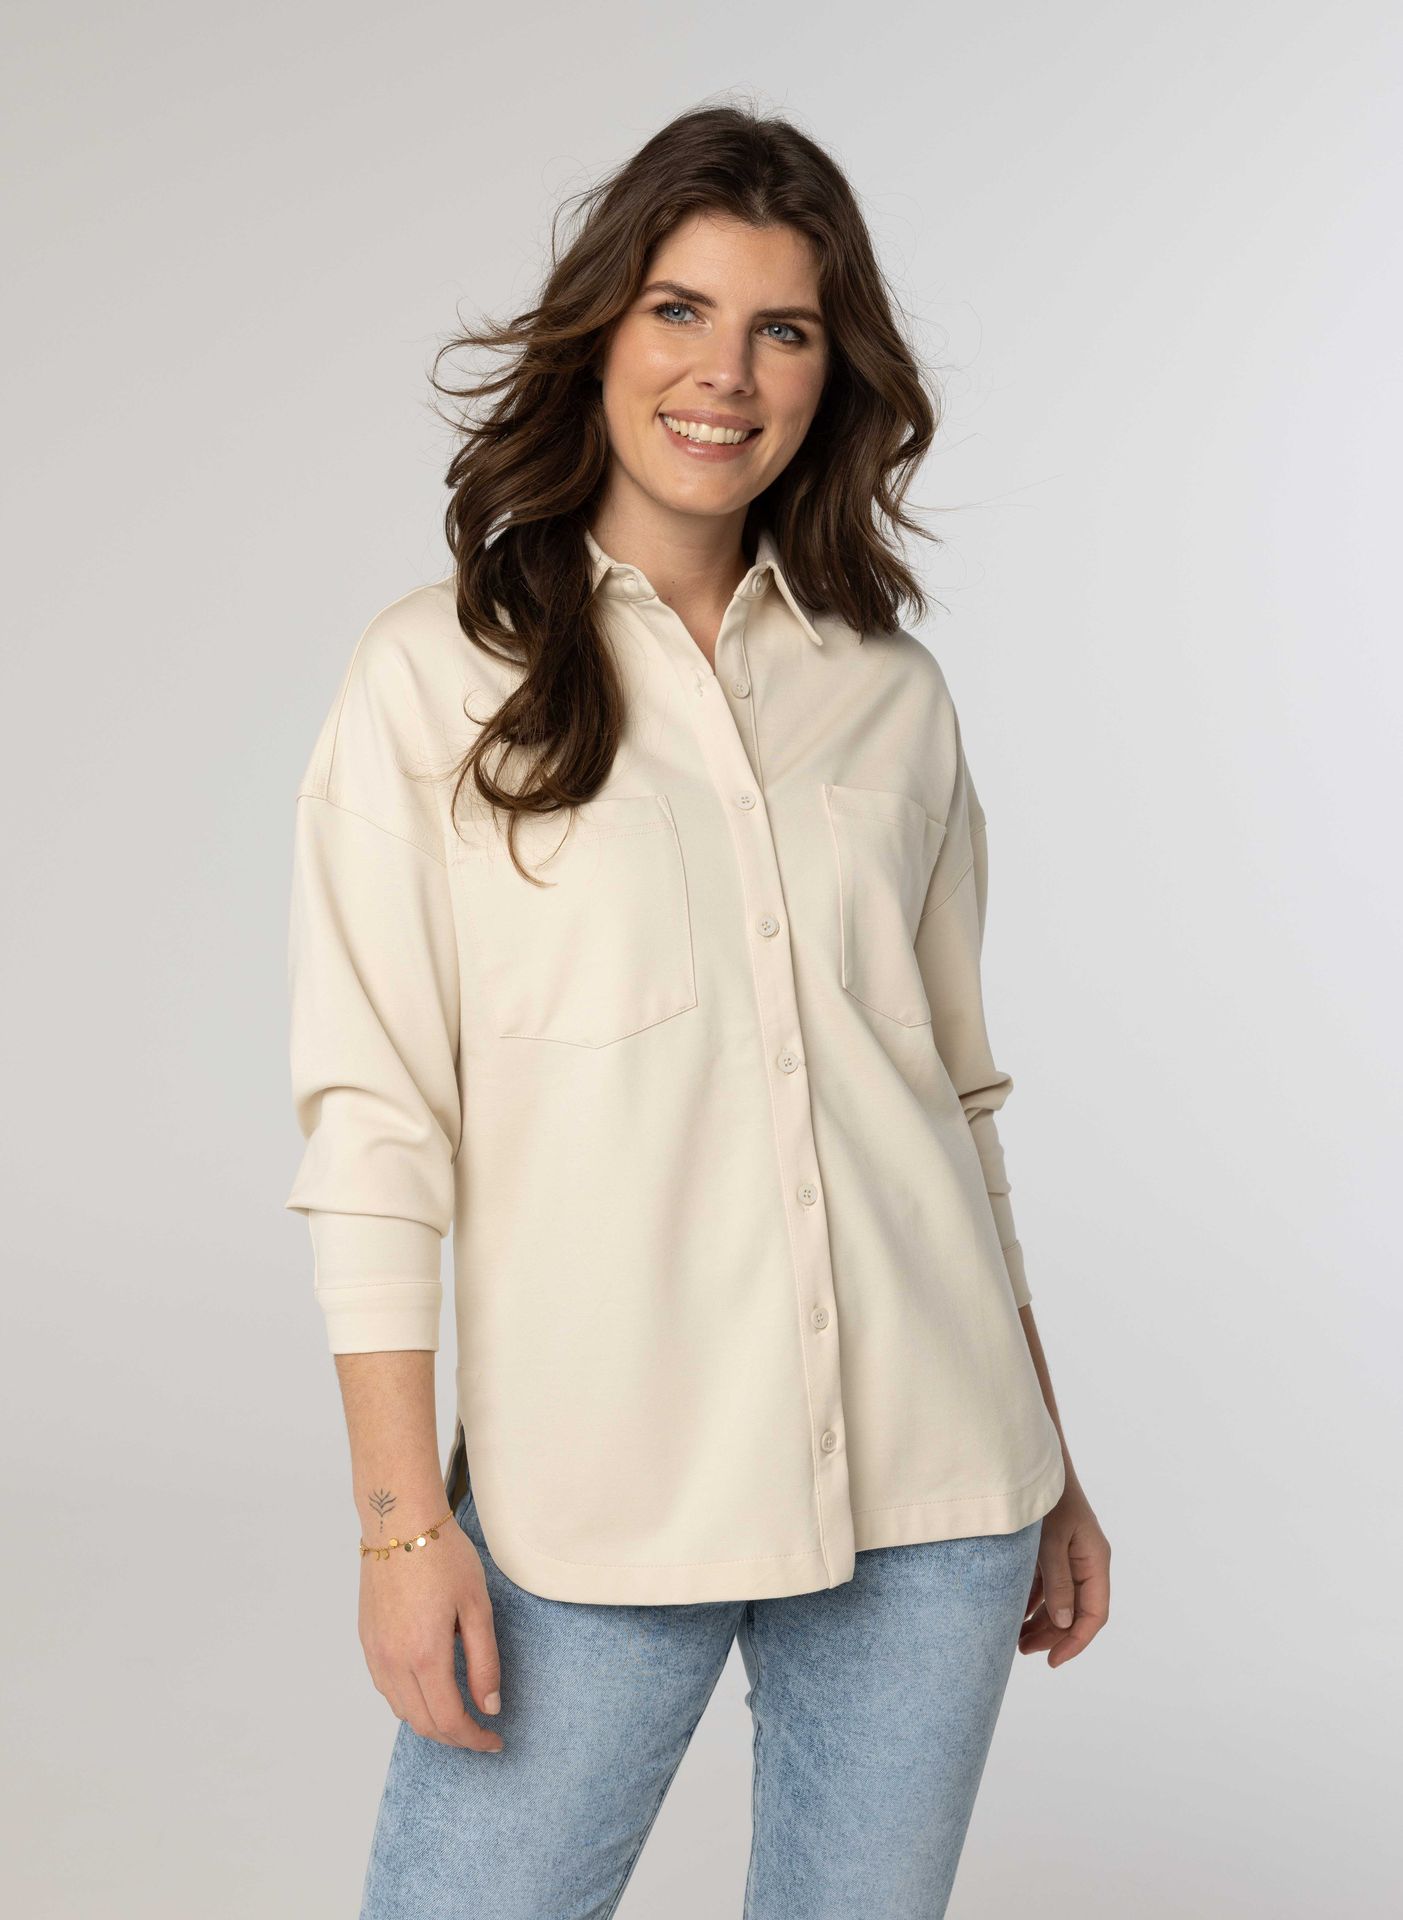 Norah Zandkleurige blouse light sand 213614-111